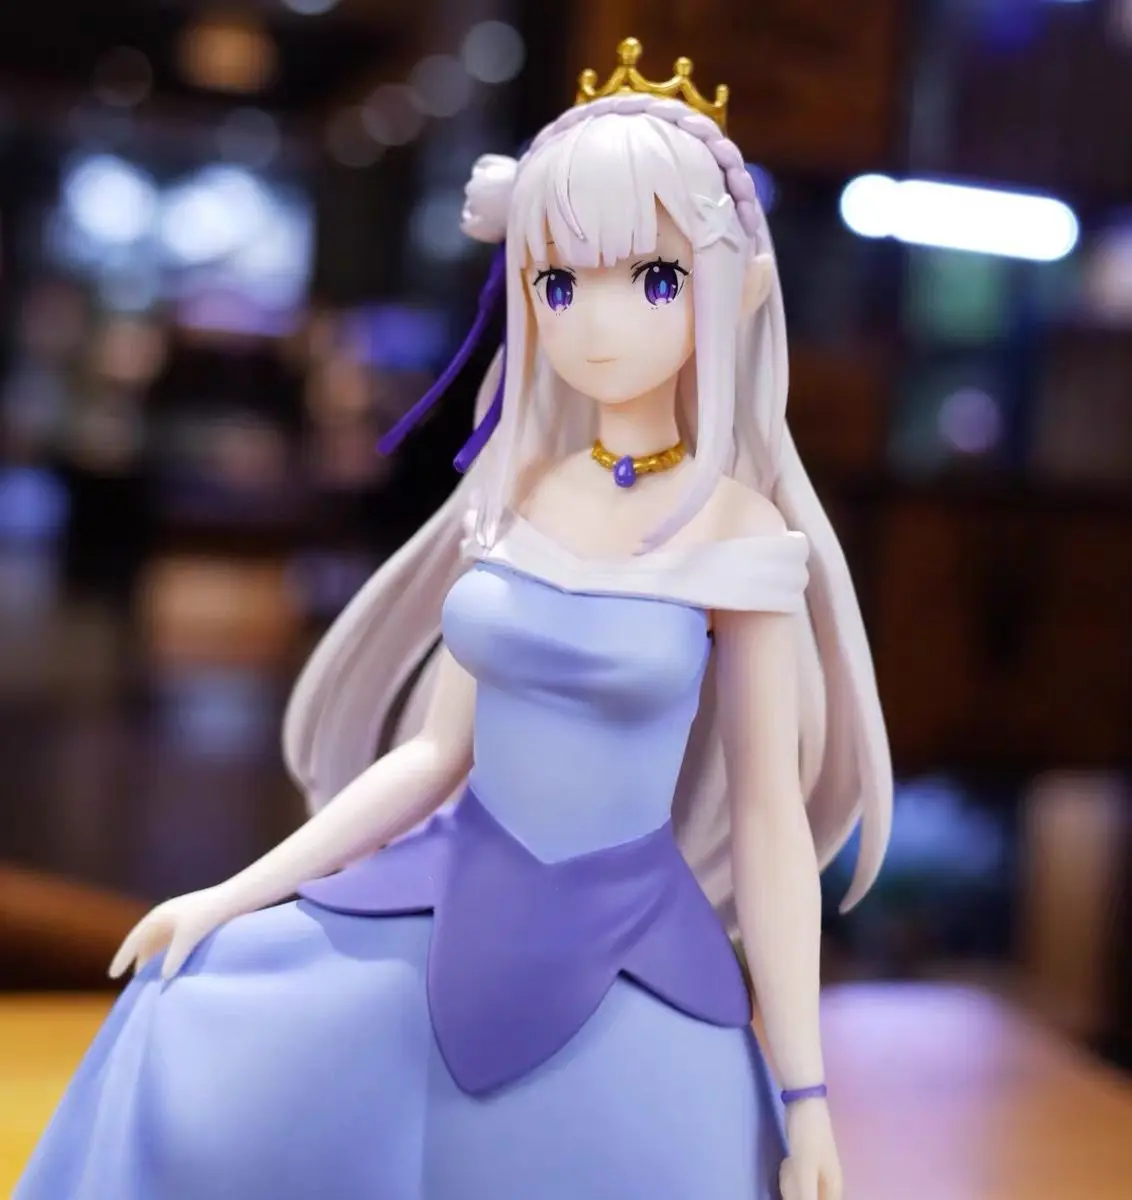 100%Original Another WorldStartingFrom Zero Emilia Sleeping Beauty Emilia PVC Anime Doll Figure Model Toy Collectible